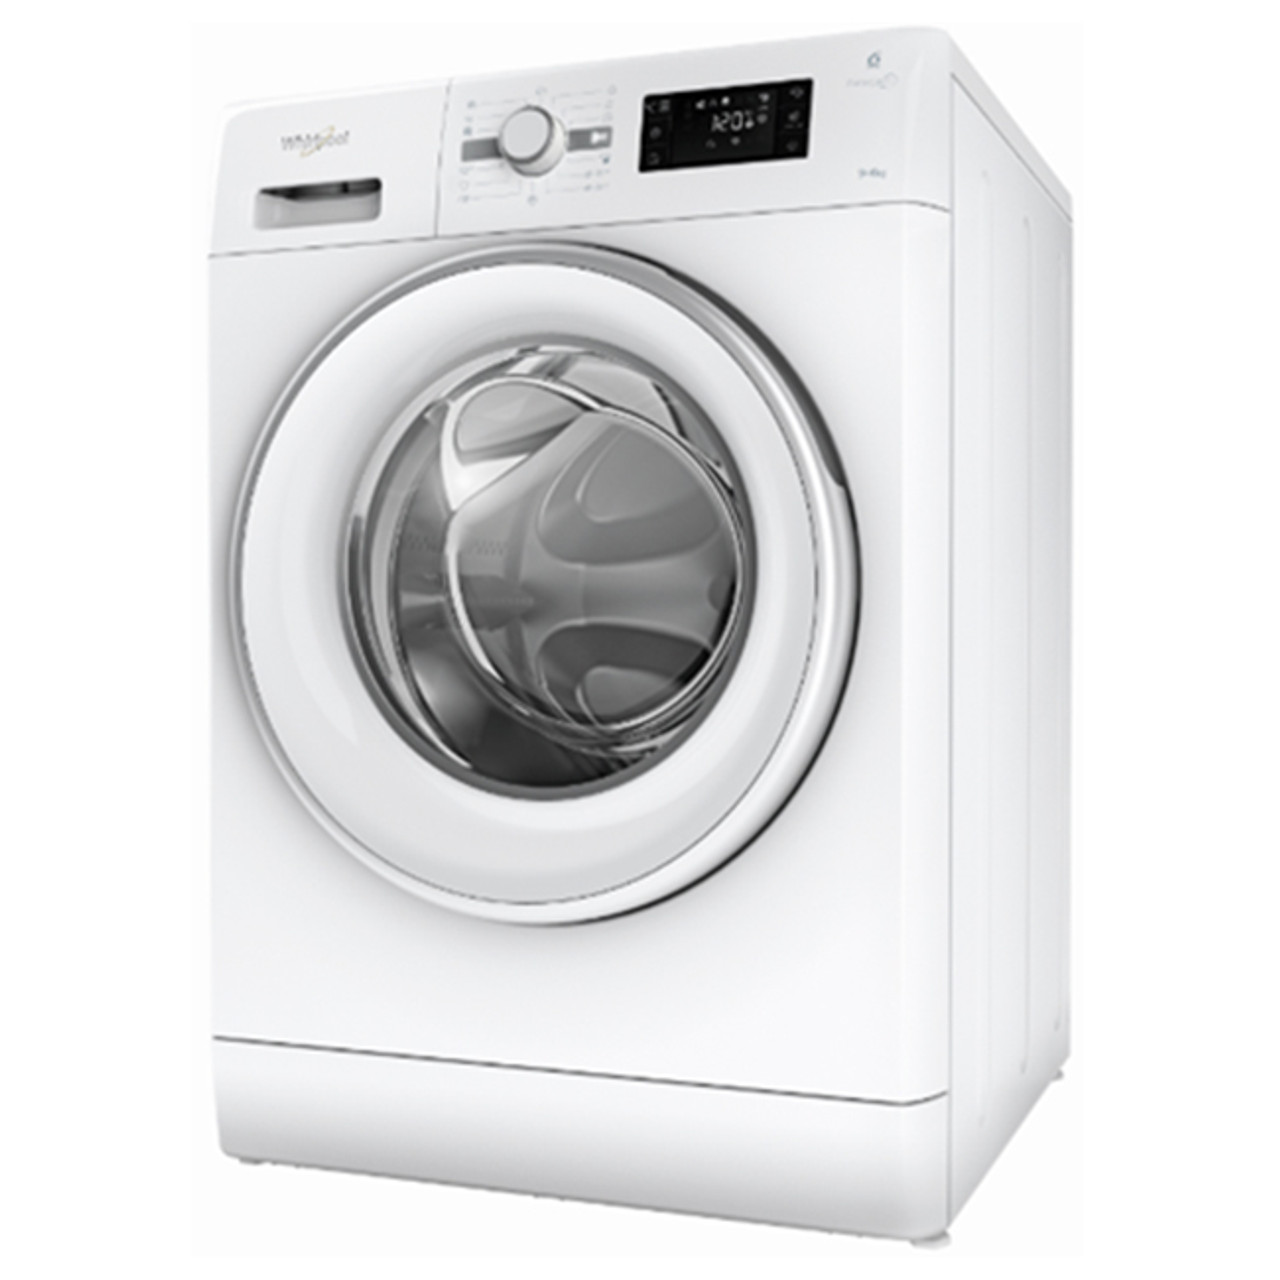 WFWDC96 - 9Kg/6Kg 6th Sense Washer/Dryer Combo - White